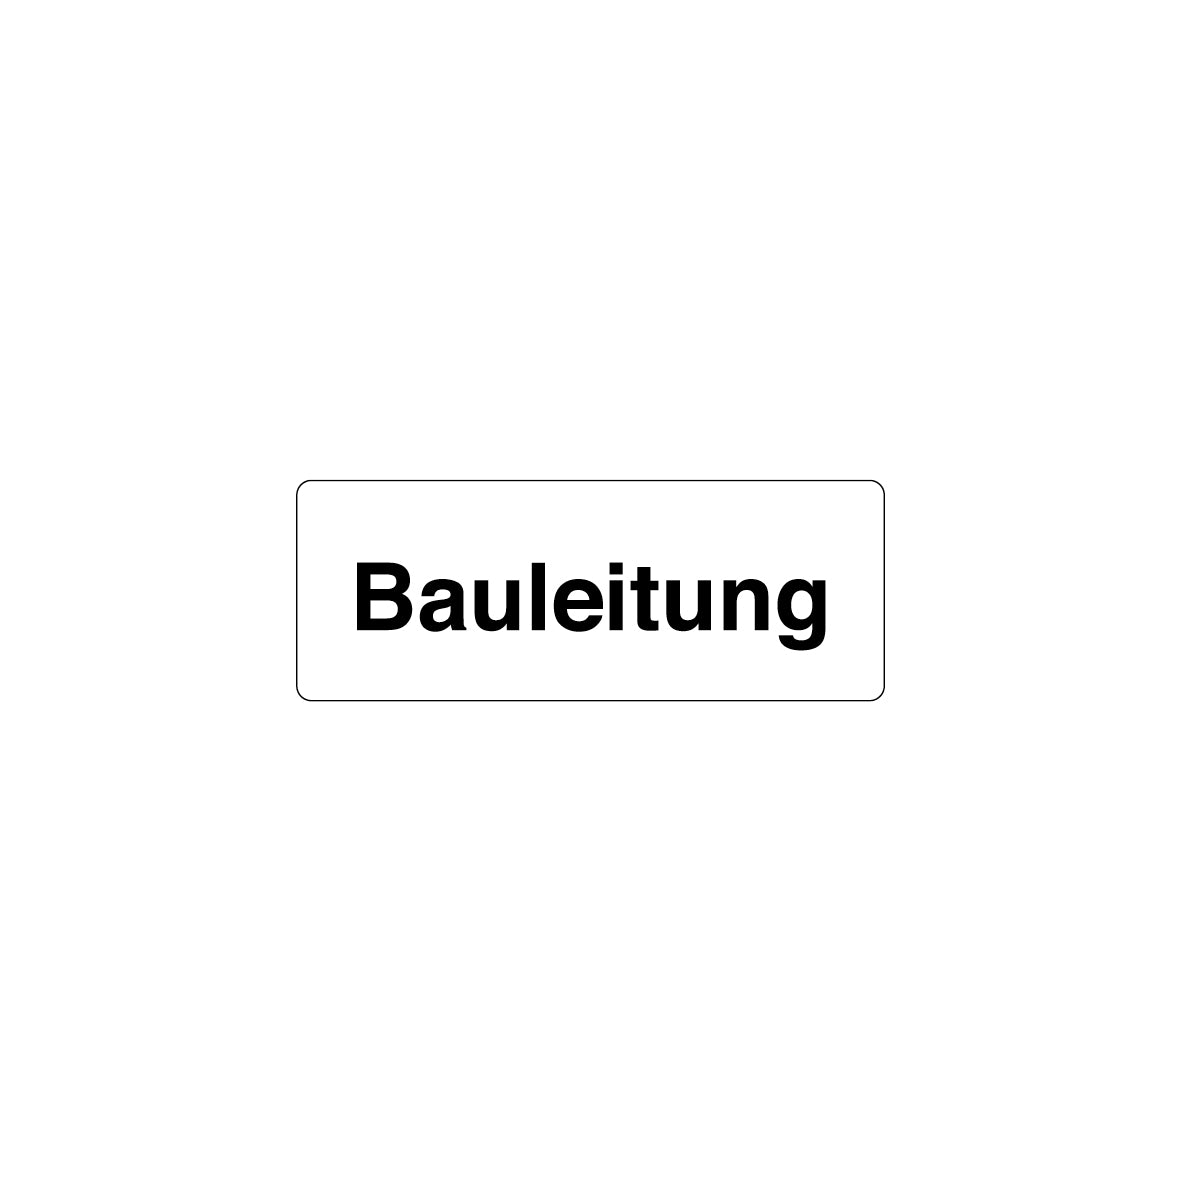 Baustellentafel, Bauleitung, 40/15 cm, EG, 7.0169